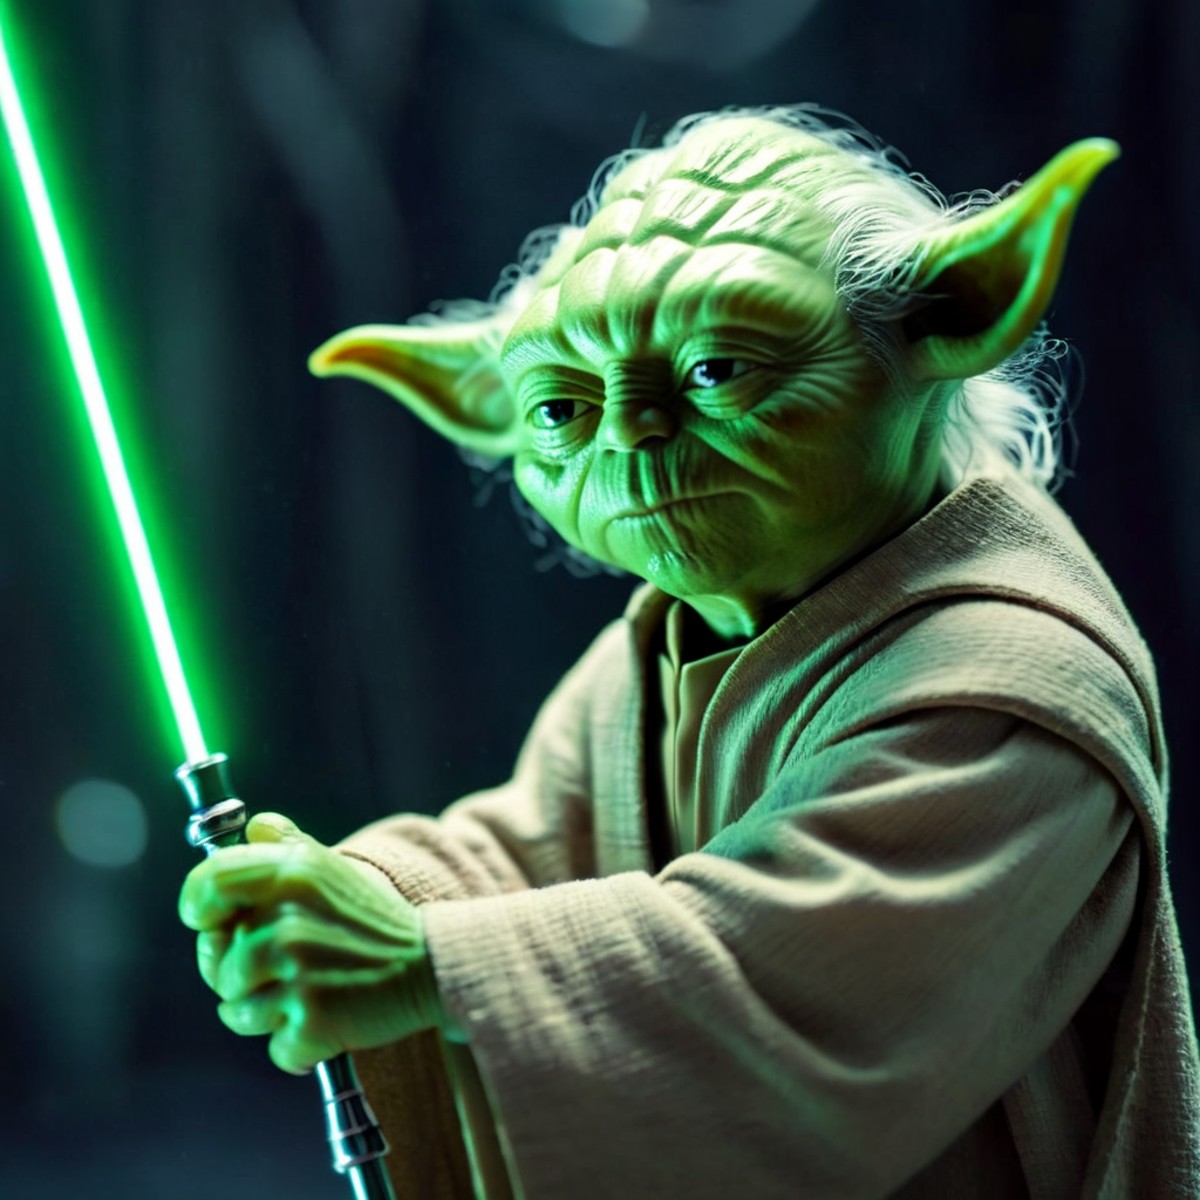 cinematic film still of  <lora:Yoda:1.2>
Yoda a cartoon yoda is holding a cane In Star Wars Universe, shallow depth of fie...